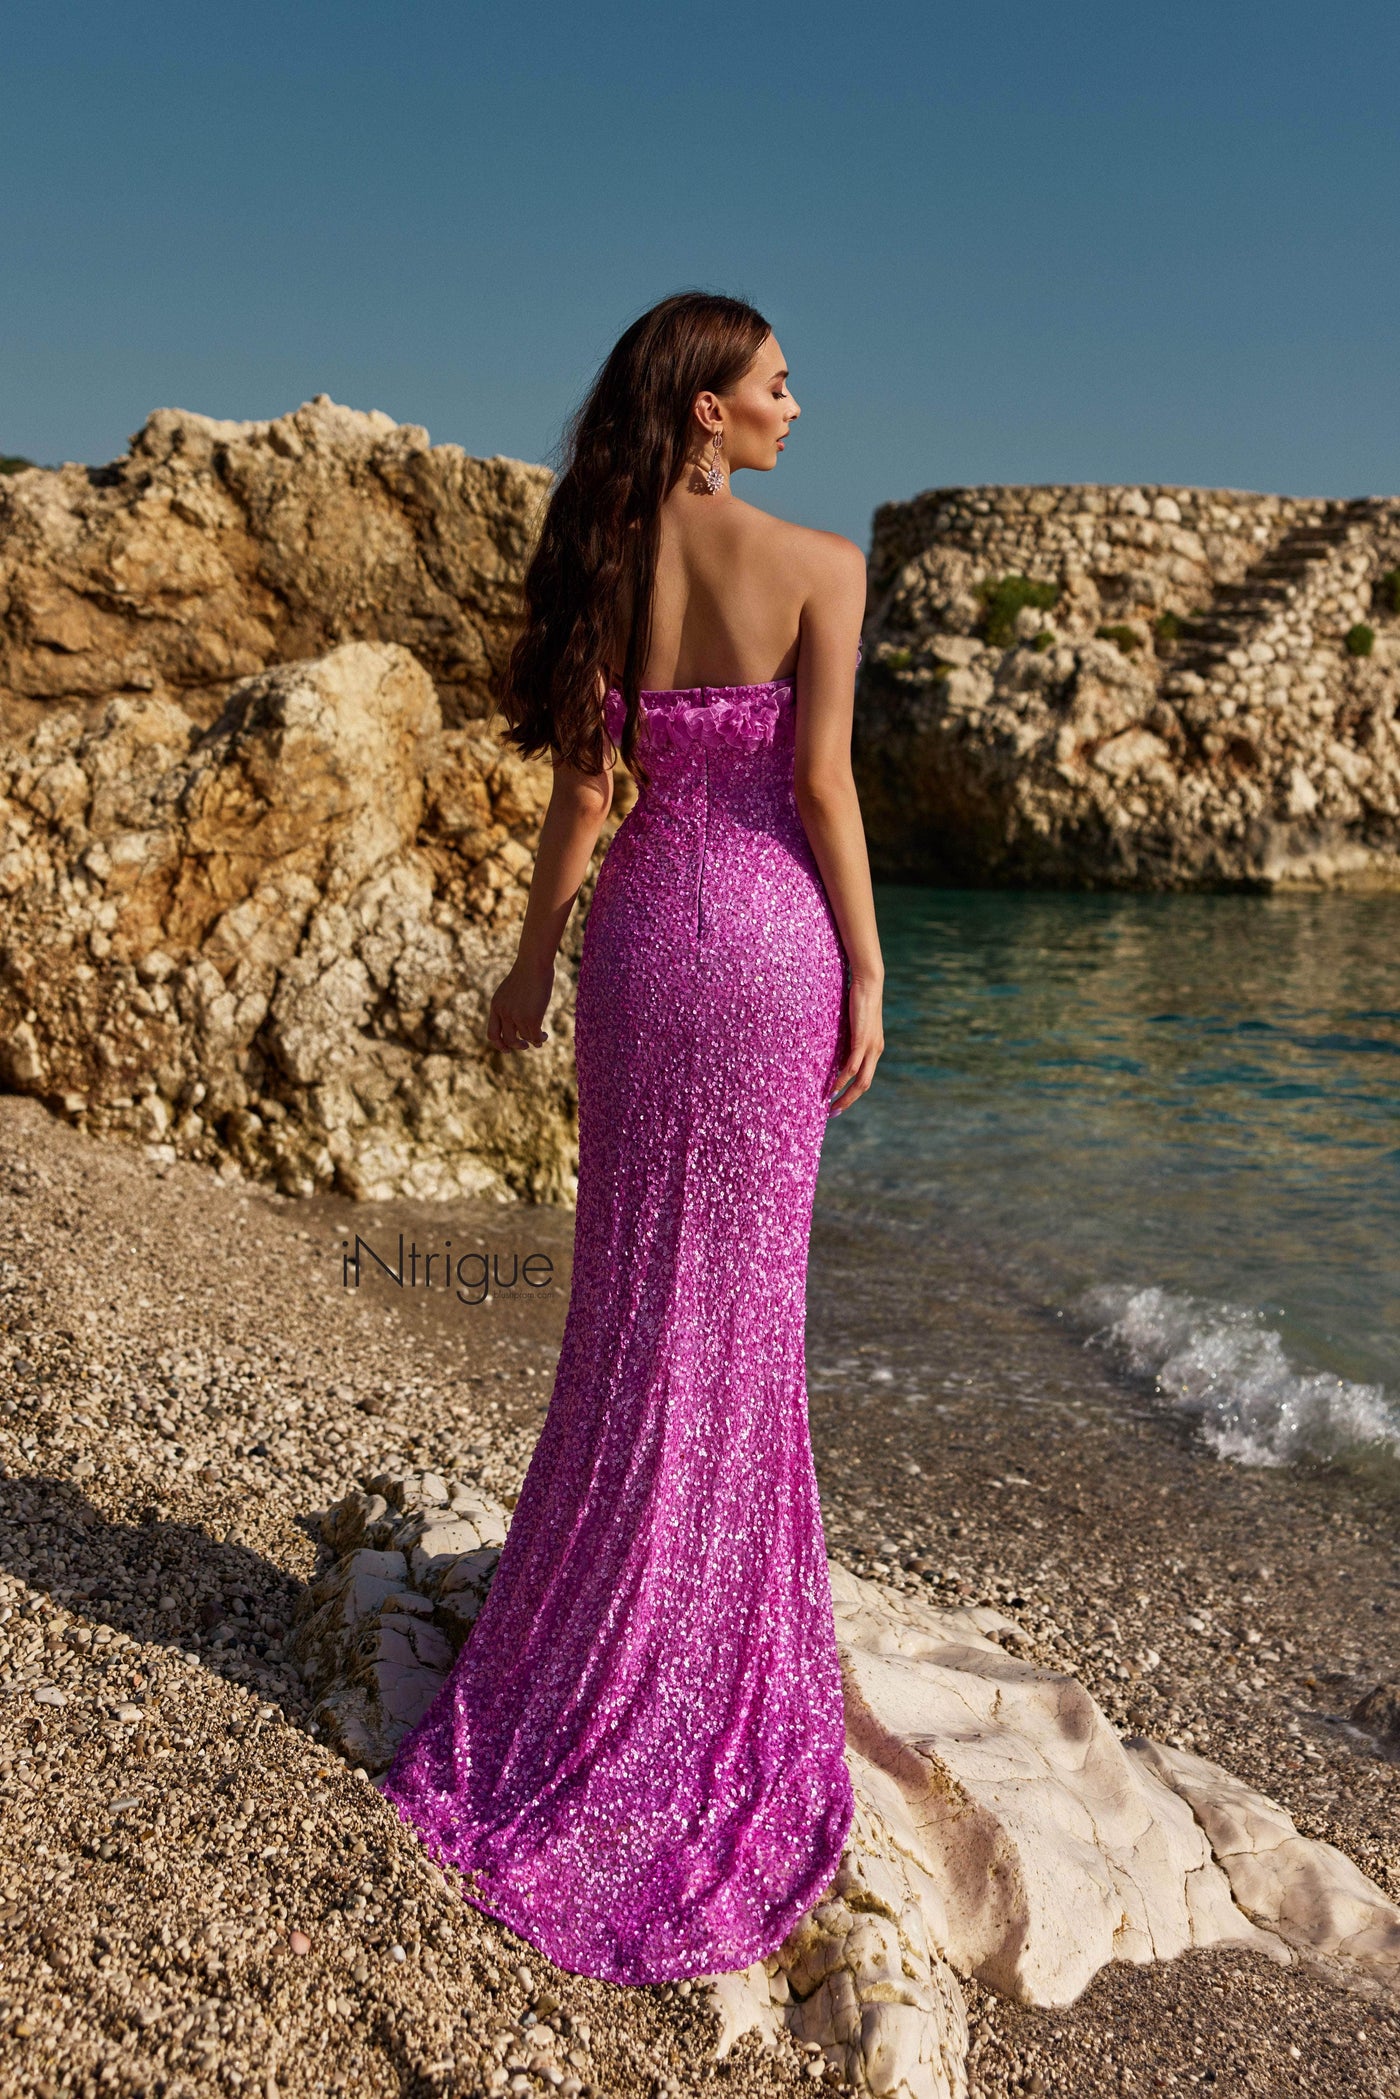 Blush by Alexia Designs 91008 - Ruffle Trim Sequin Prom DressSpecial Occasion Dress